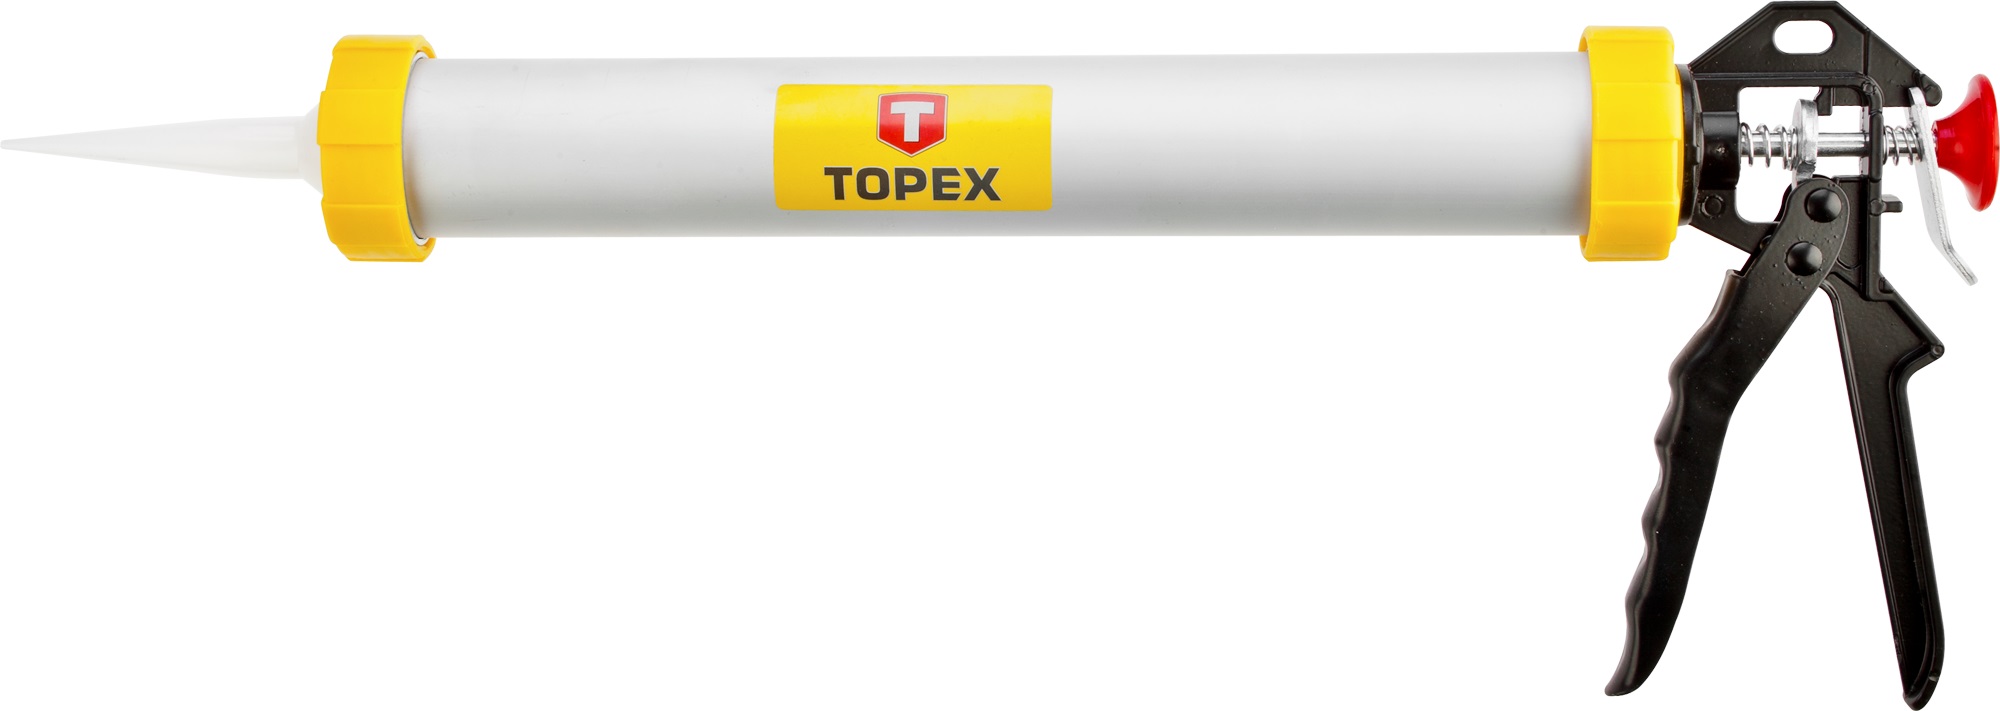 Topex 21B360